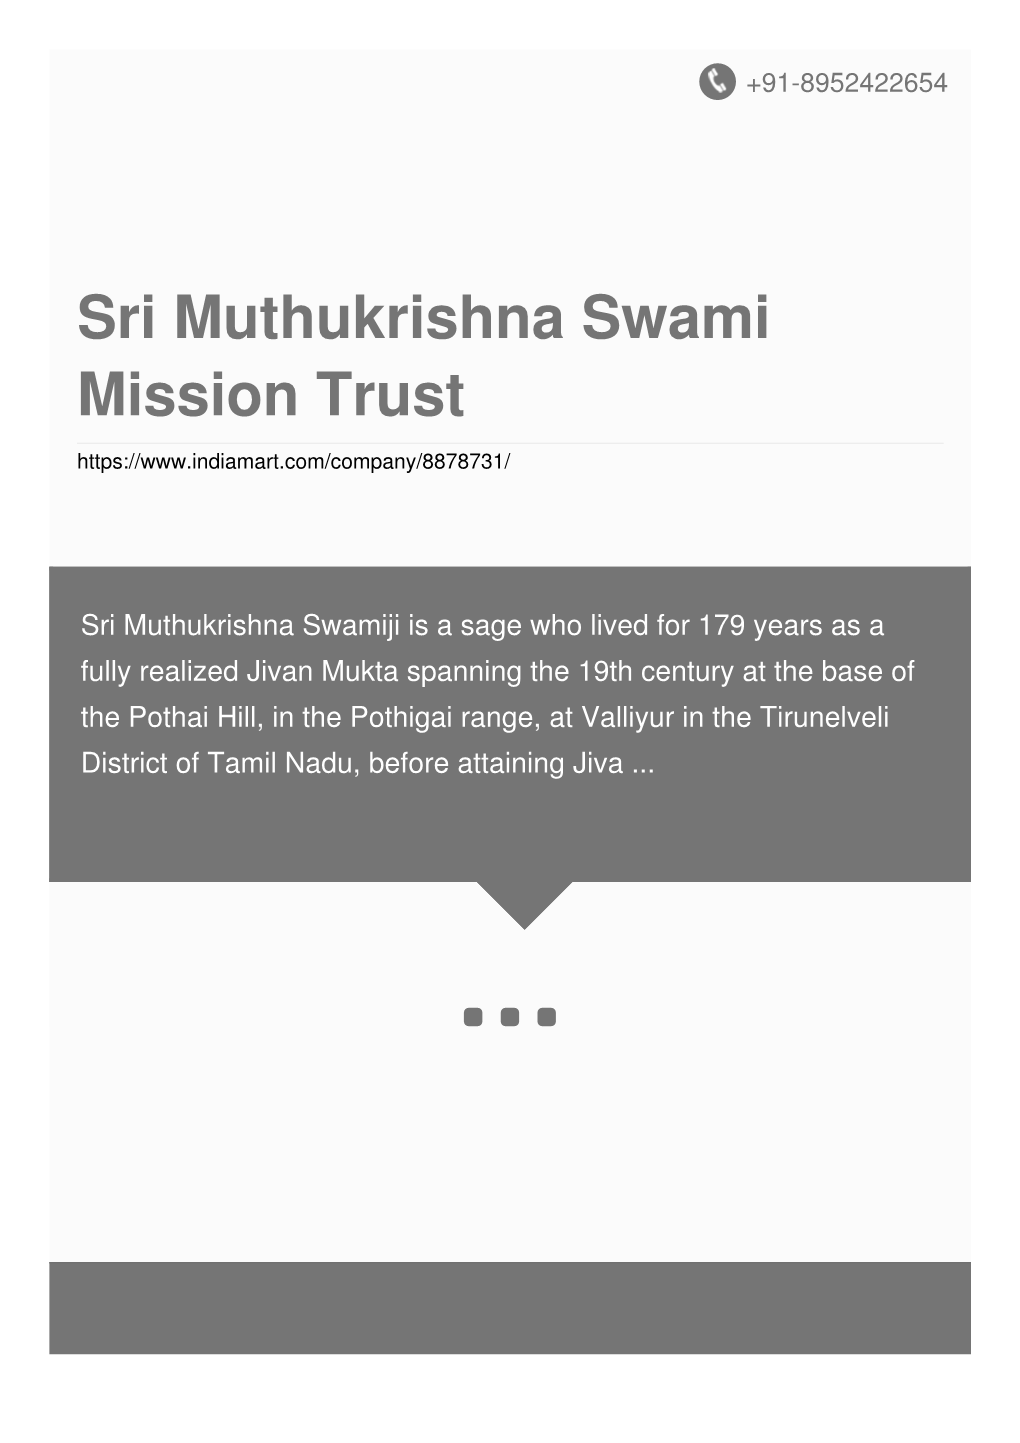 Sri Muthukrishna Swami Mission Trust